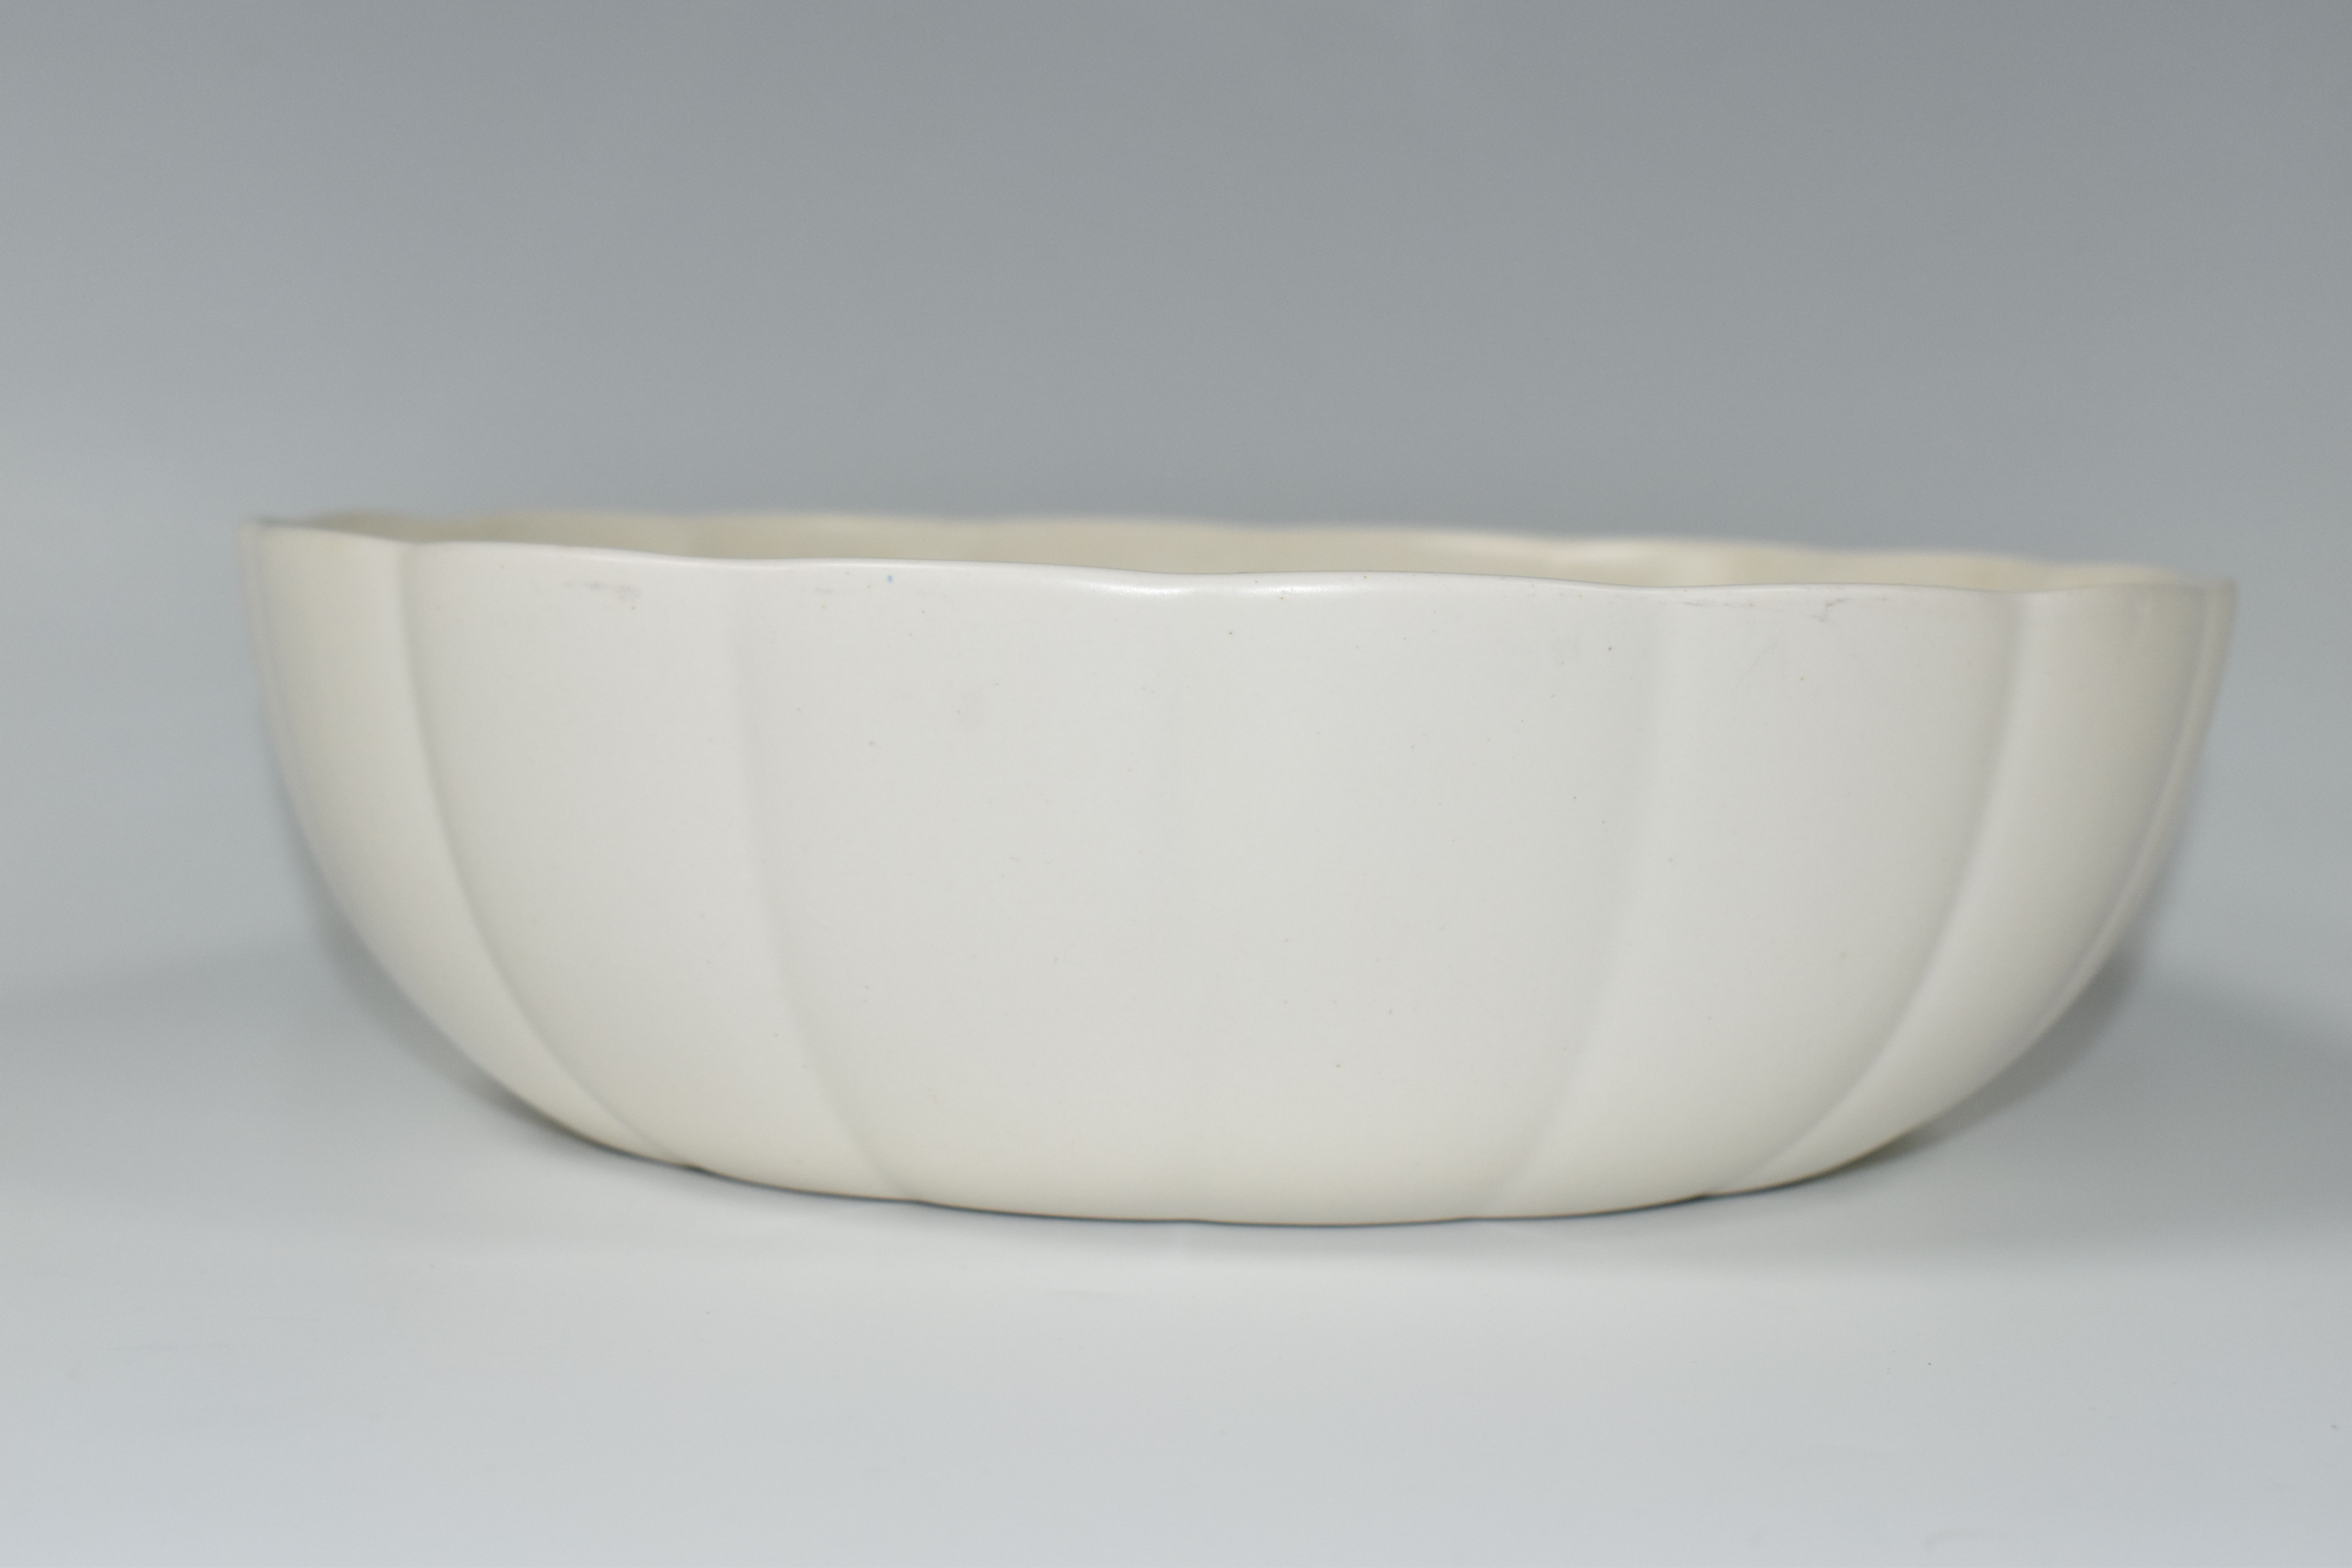 A KEITH MURRAY DESIGN BOWL FOR WEDGWOOD, a cream fluted bowl, blue printed backstamp, diameter - Image 4 of 6